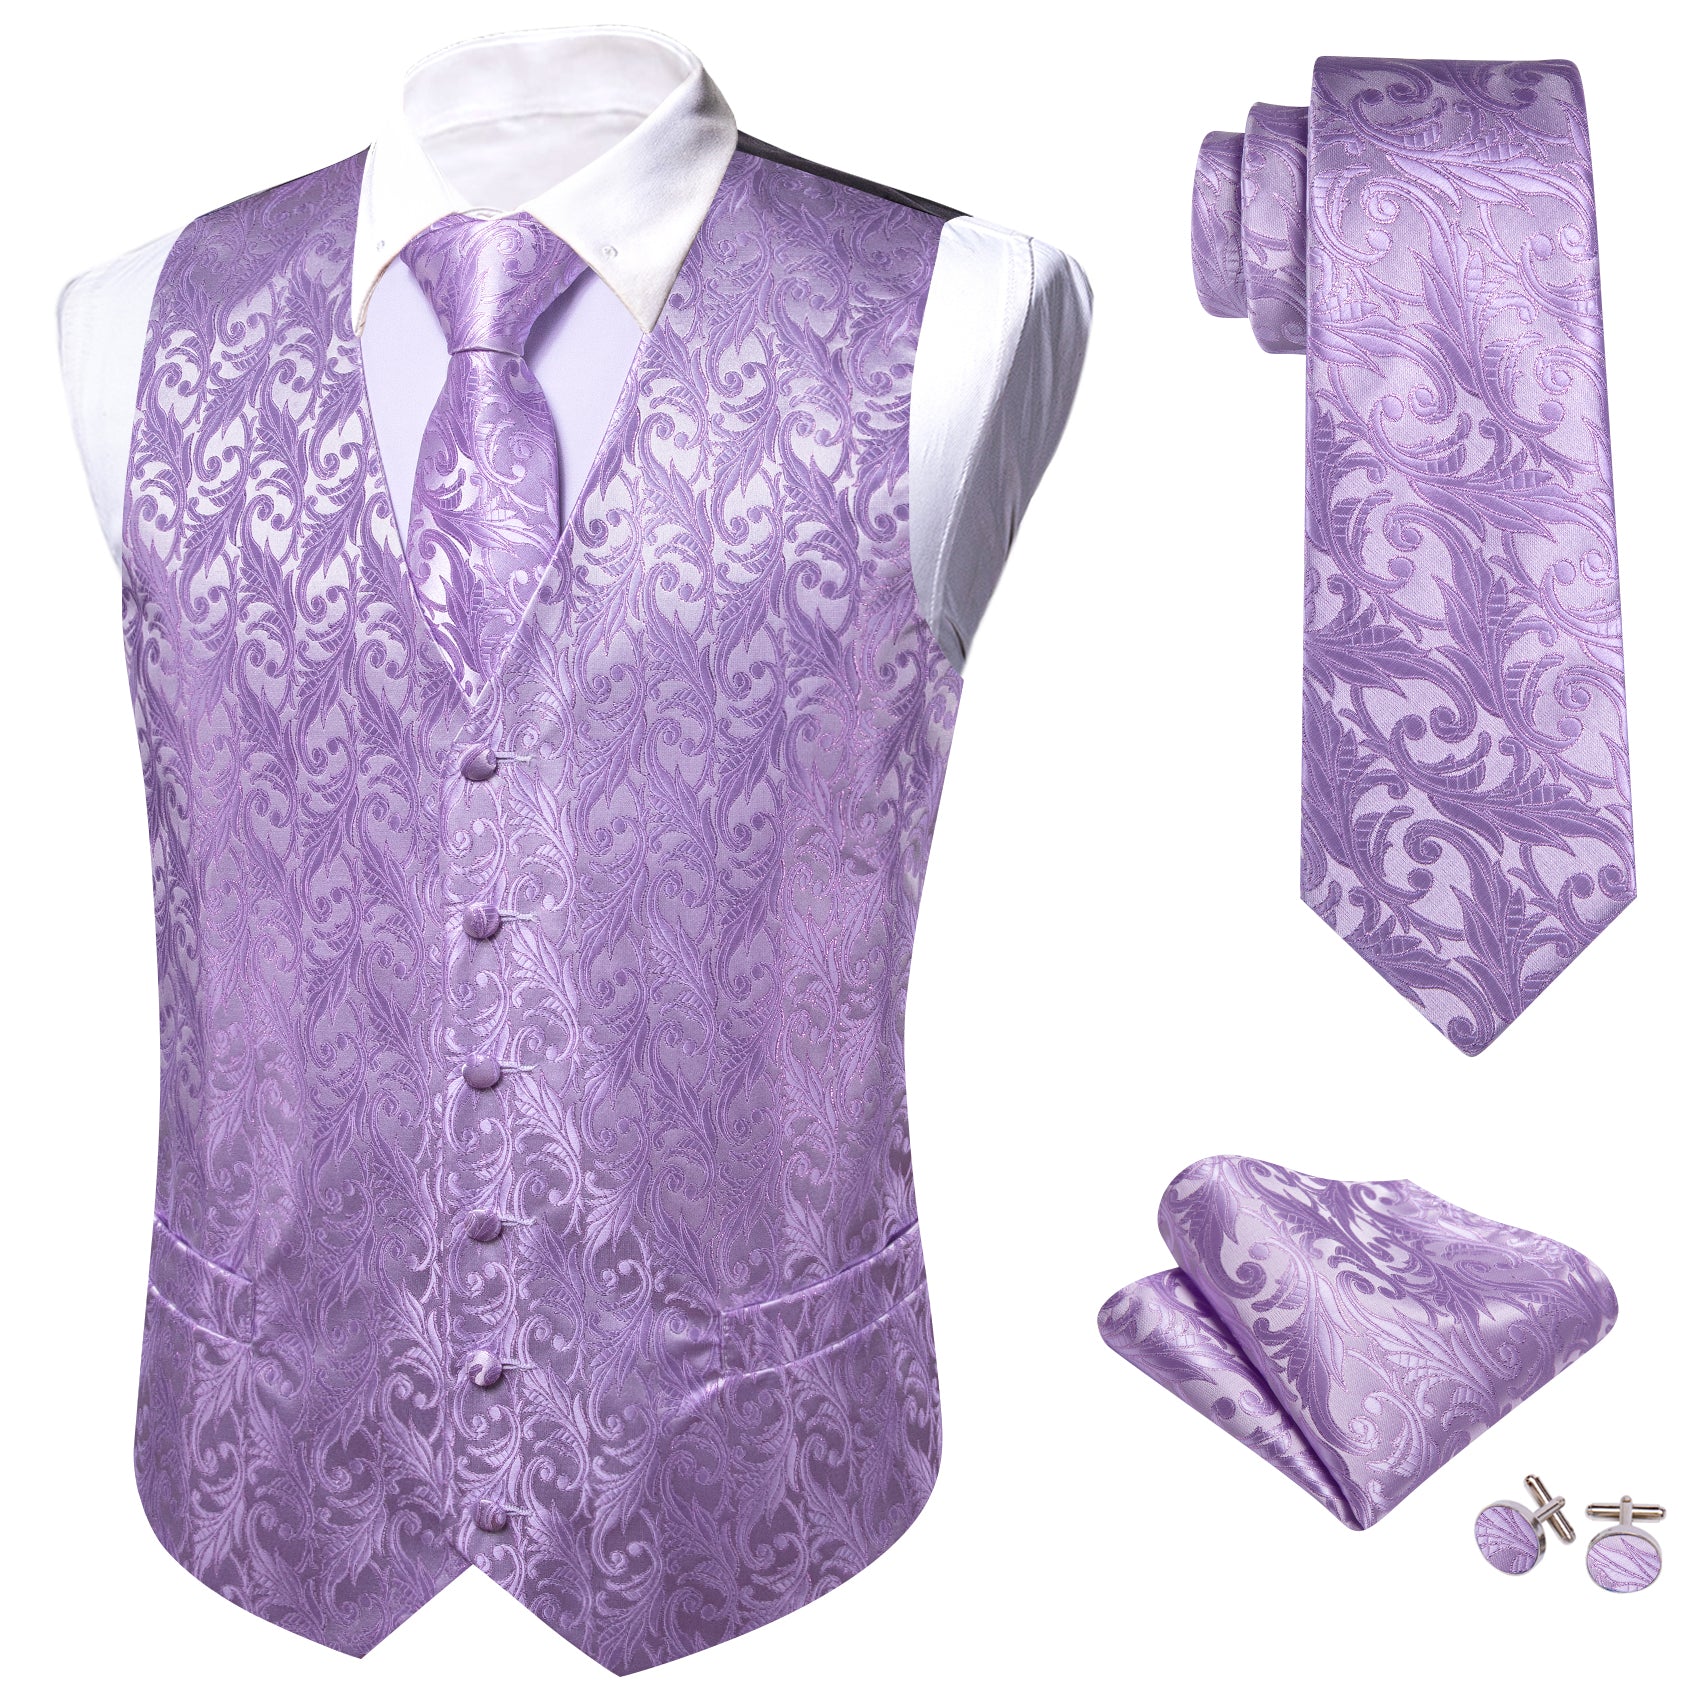 Barry Wang Purple Floral Silk Vest Necktie Pocket Square Cufflinks Set